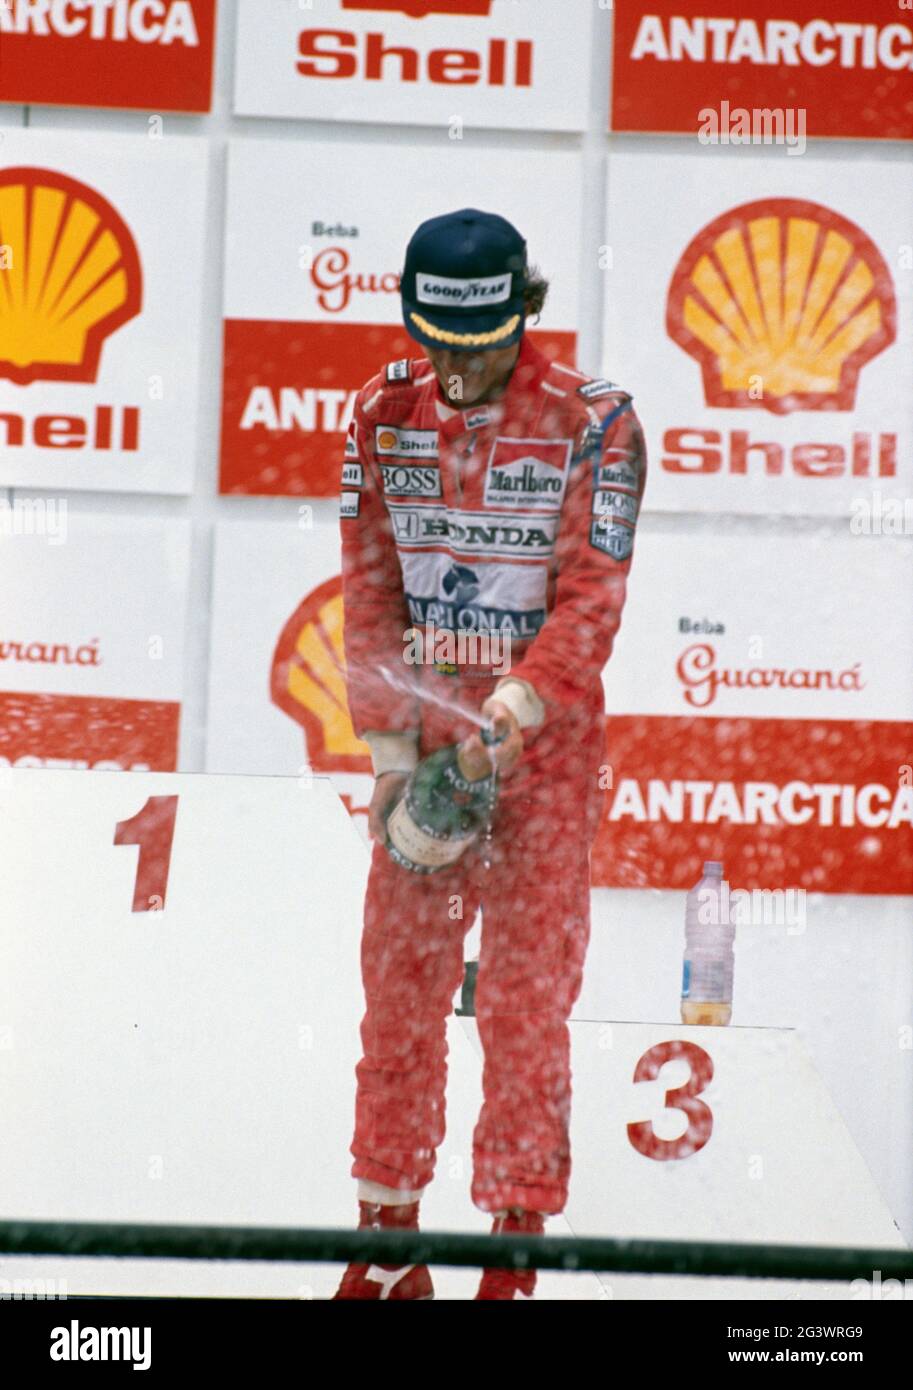 Ayrton Senna - Australia GP (1991)